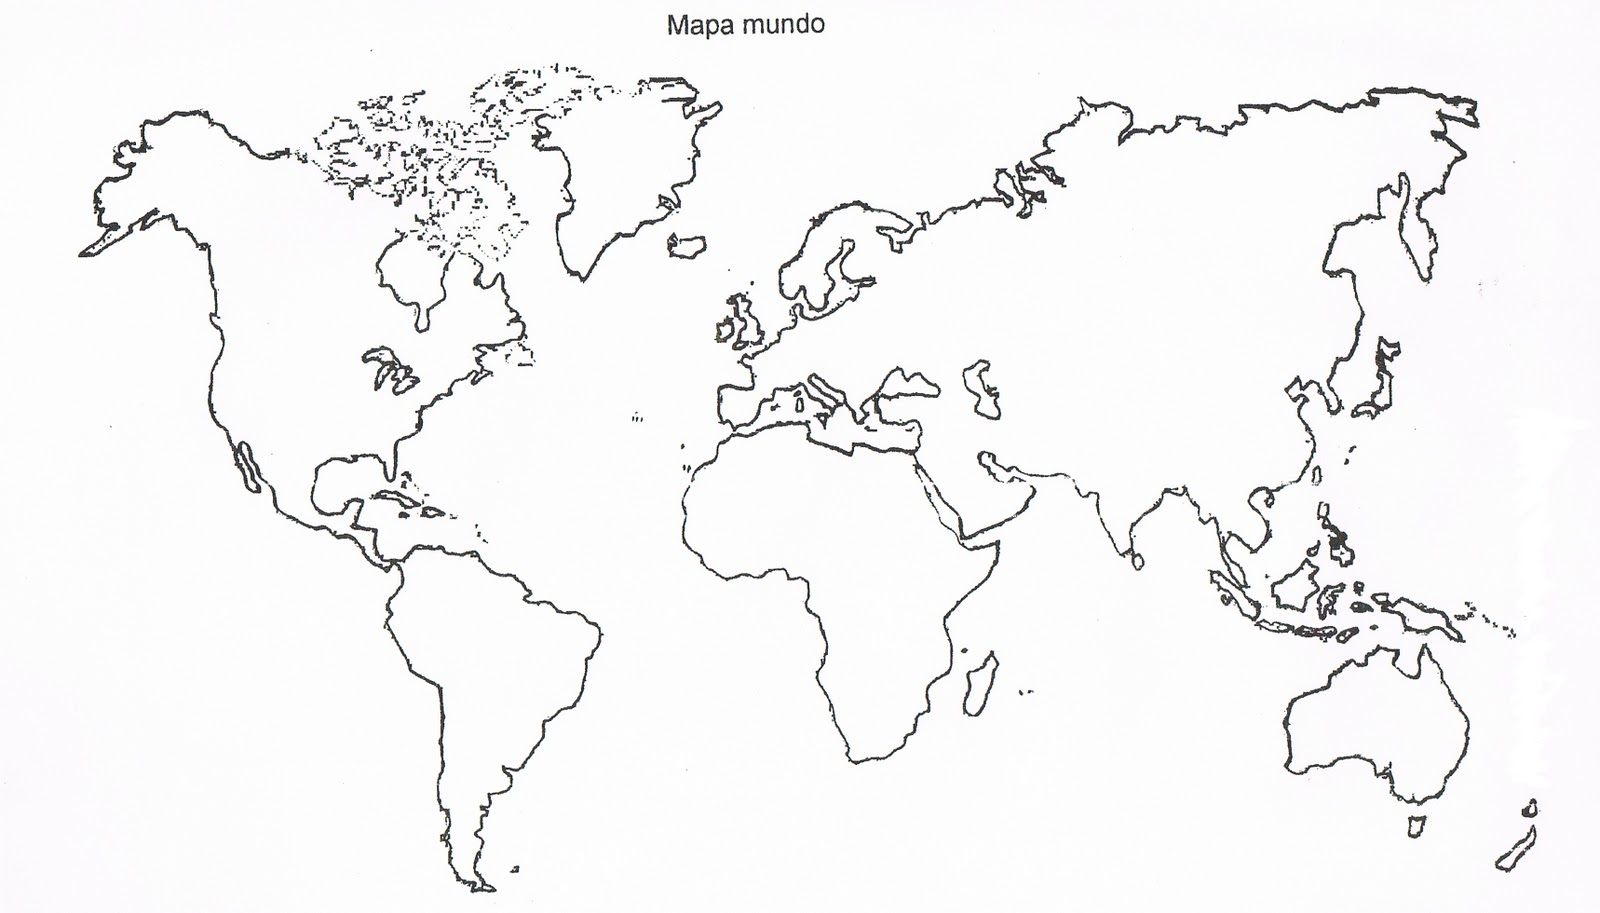 Mapa politico mundial mudo